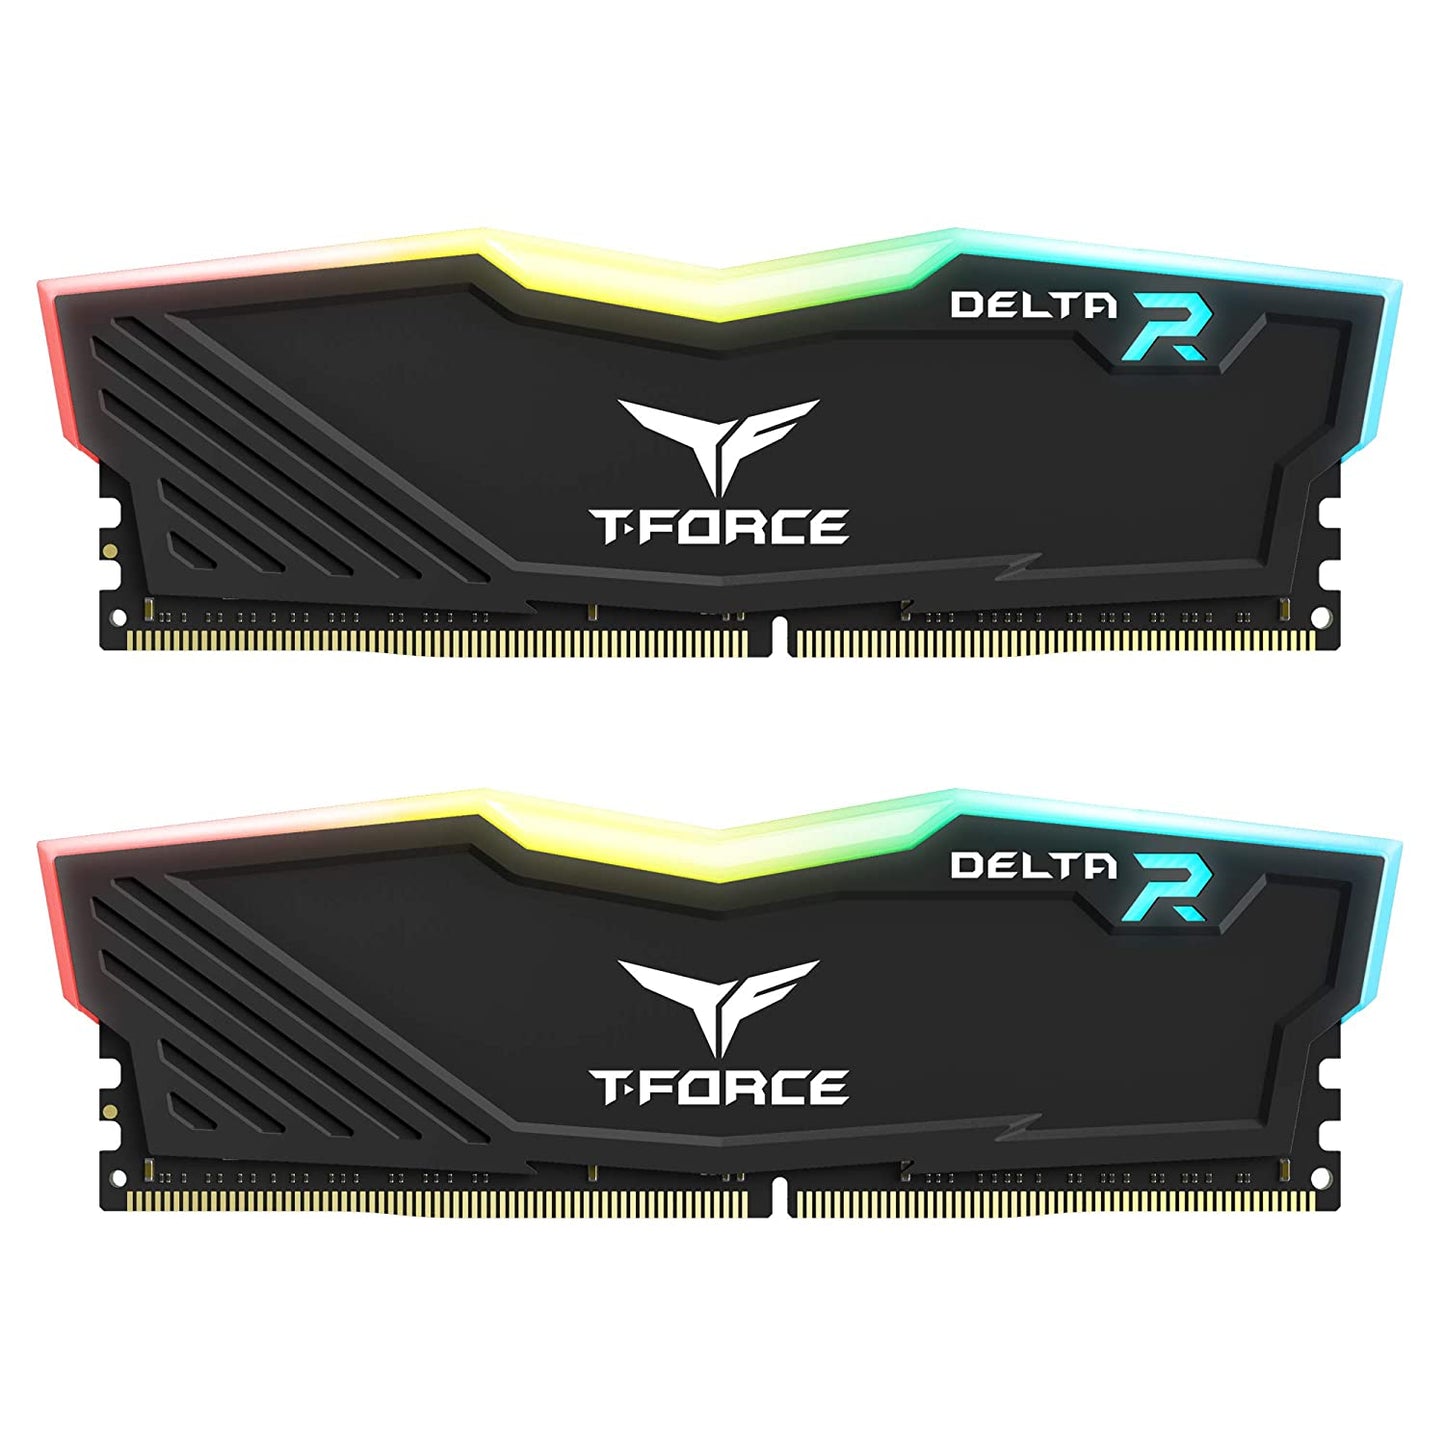 TEAMGROUP T-Force Delta RGB DDR4 16GB (8GBx2) 3200MHz (PC4-25600) CL16 Desktop Memory Module ram TF3D416G3200HC16CDC01 - Black